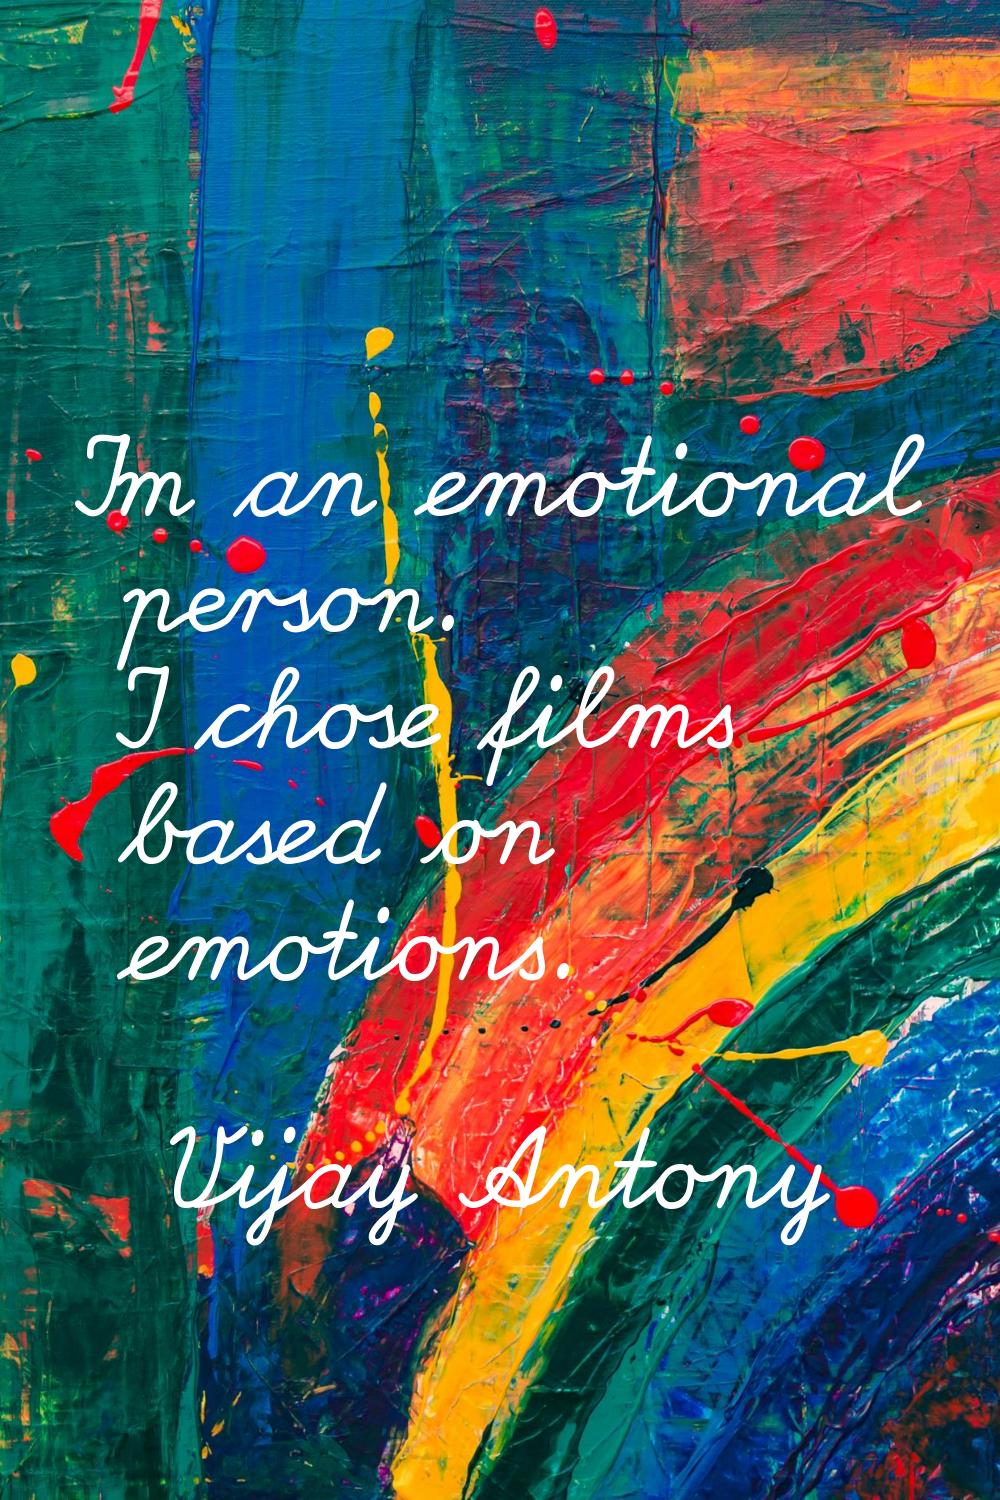 I'm an emotional person. I chose films based on emotions.